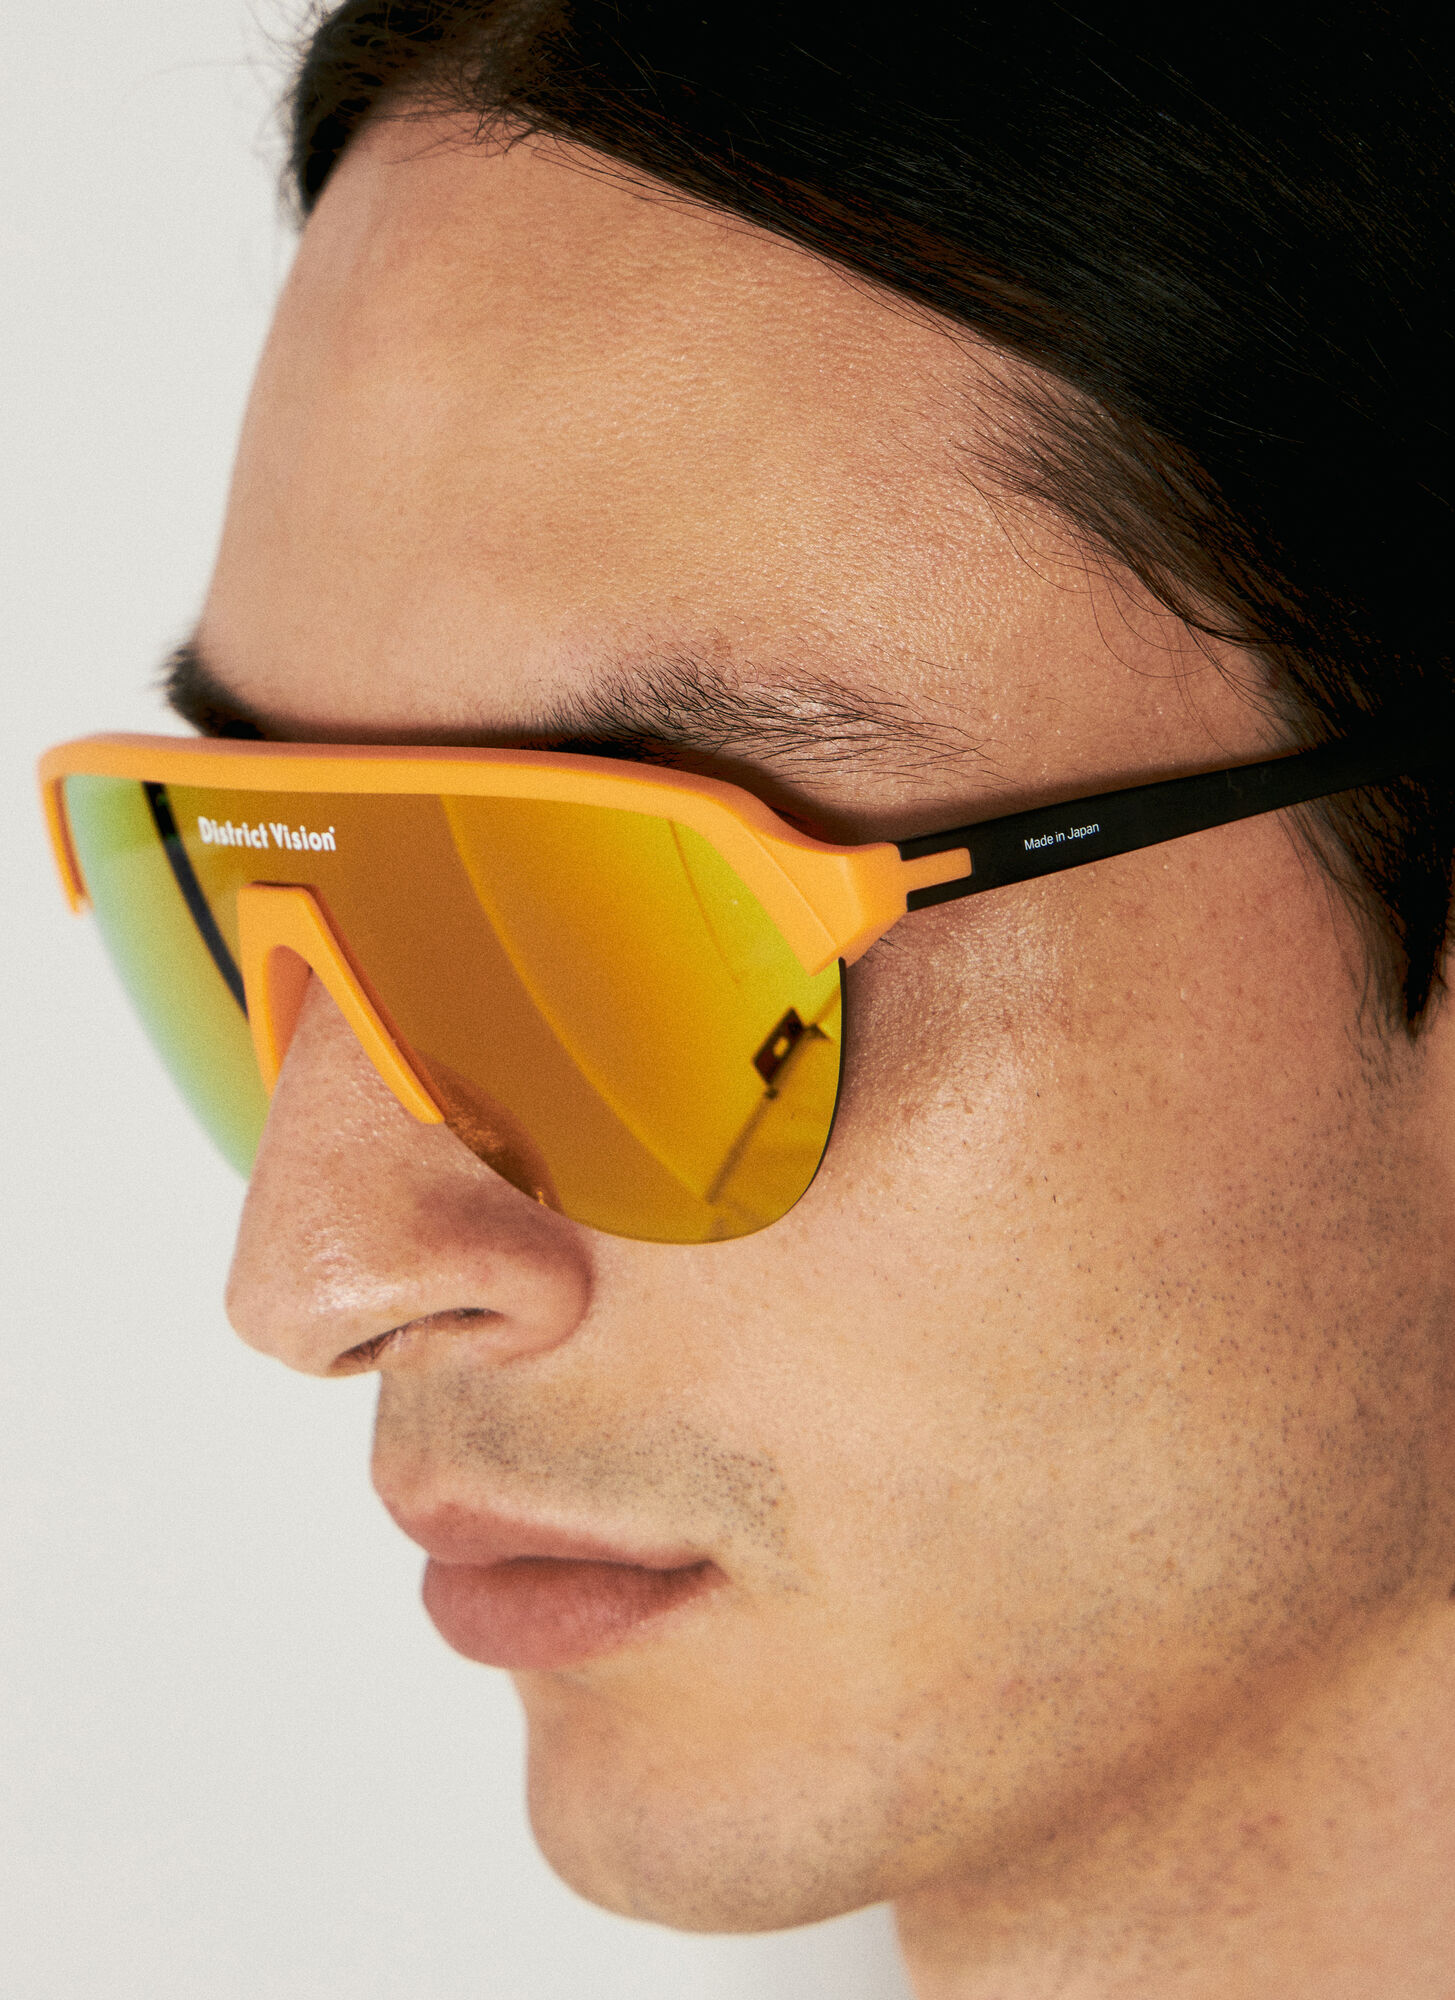 District Vision Nagata Speed Blade Sunglasses In Orange